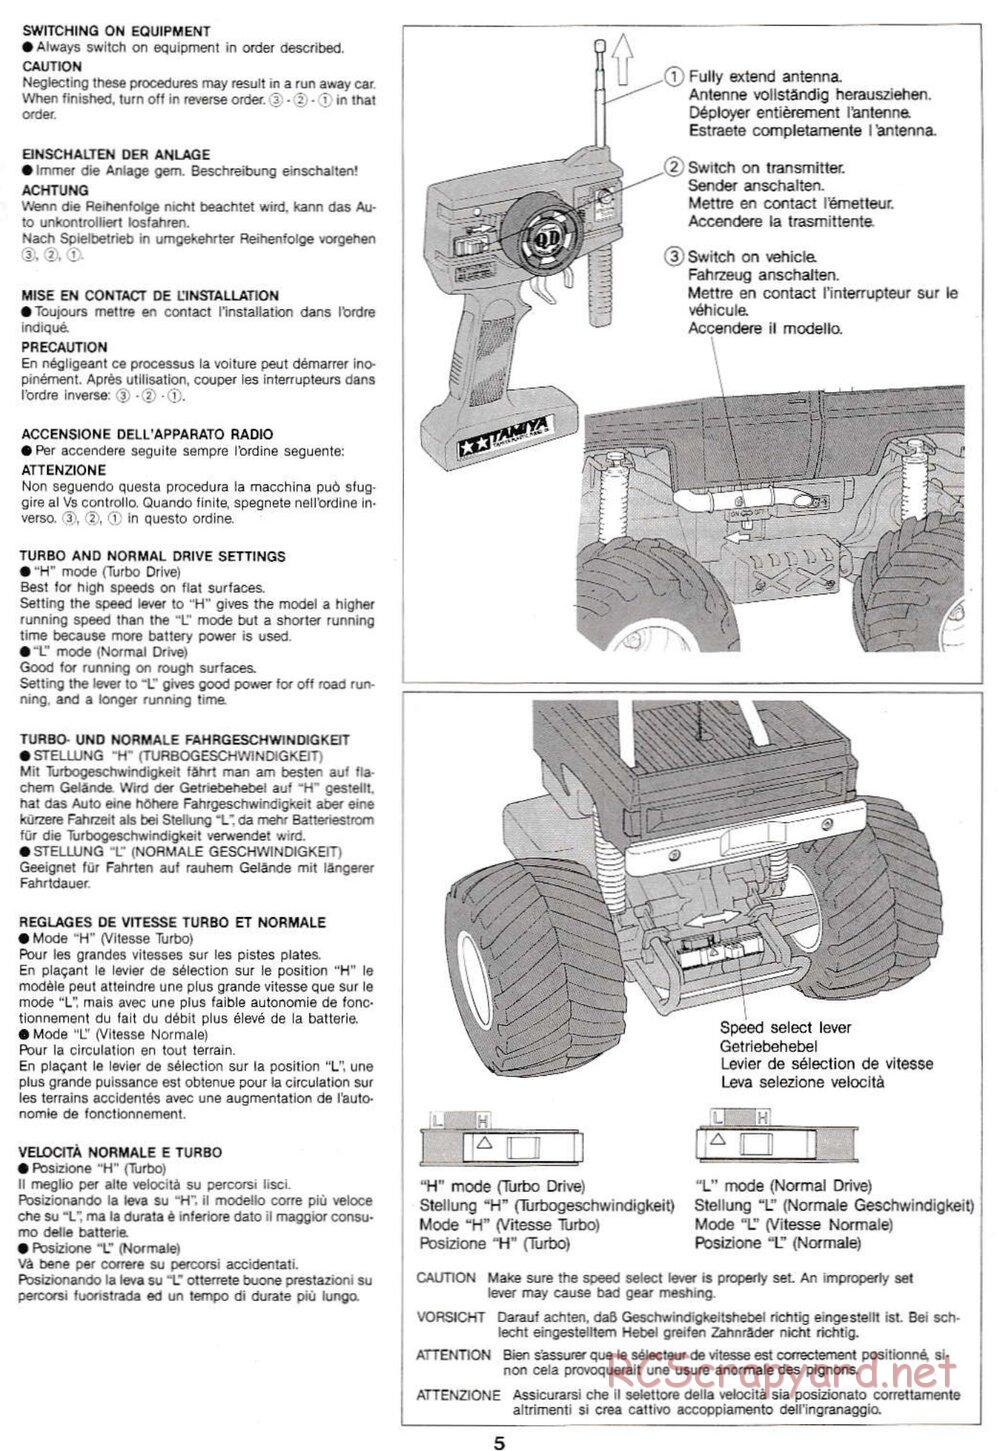 Tamiya - Clod Buster QD Chassis - Manual - Page 5